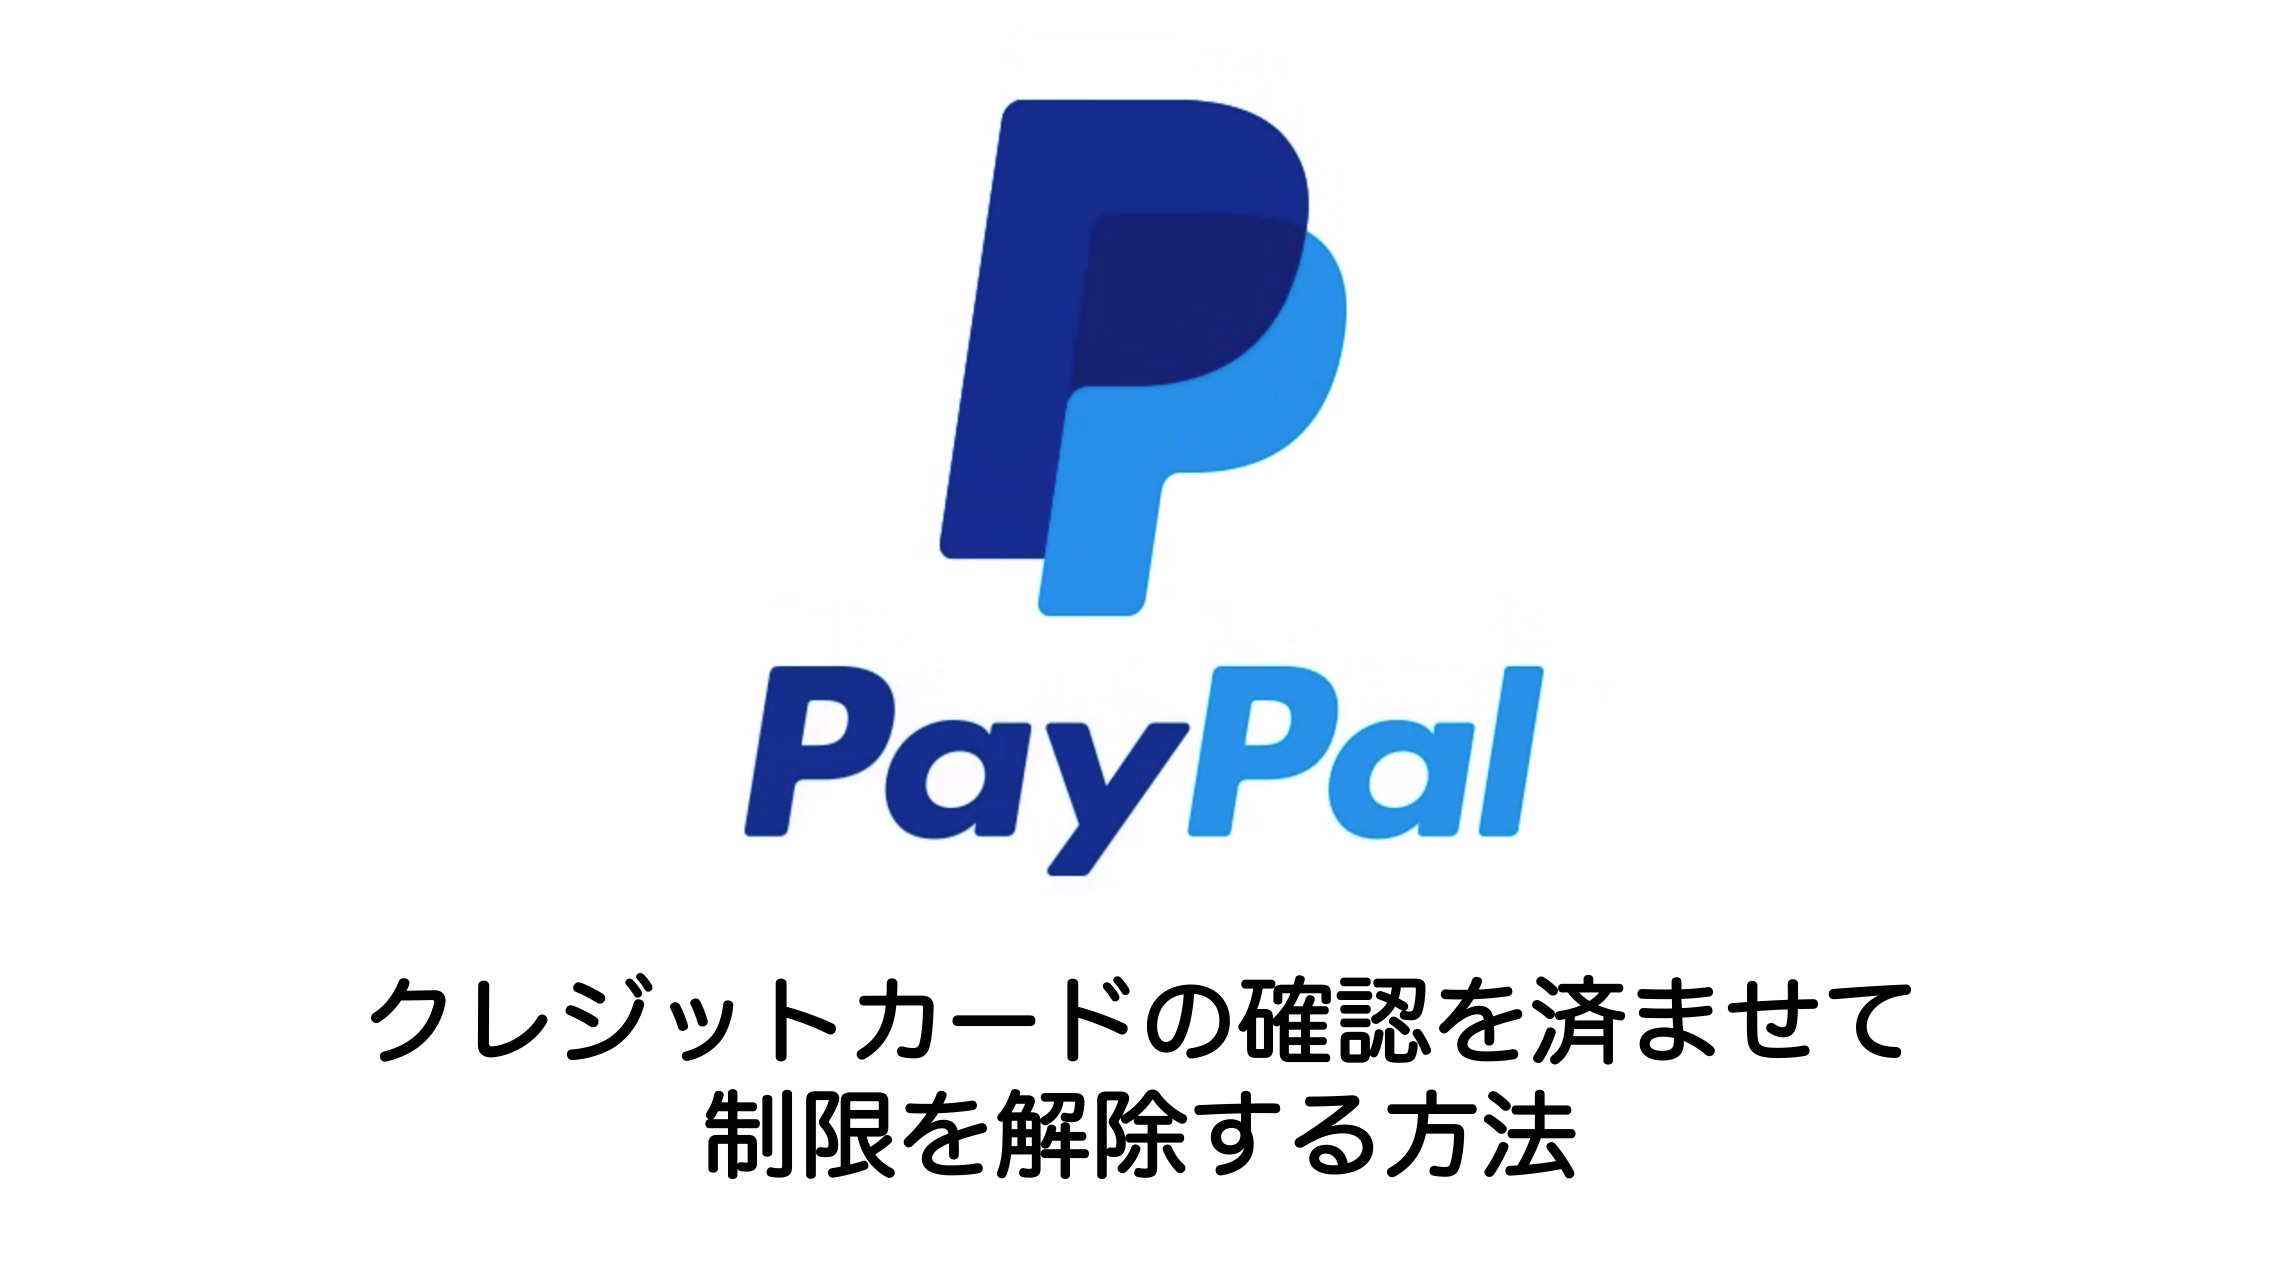 Paypal 新規クレジットカードはすぐに制限を解除しよう 簡単なコード確認で制限を解除する方法について解説